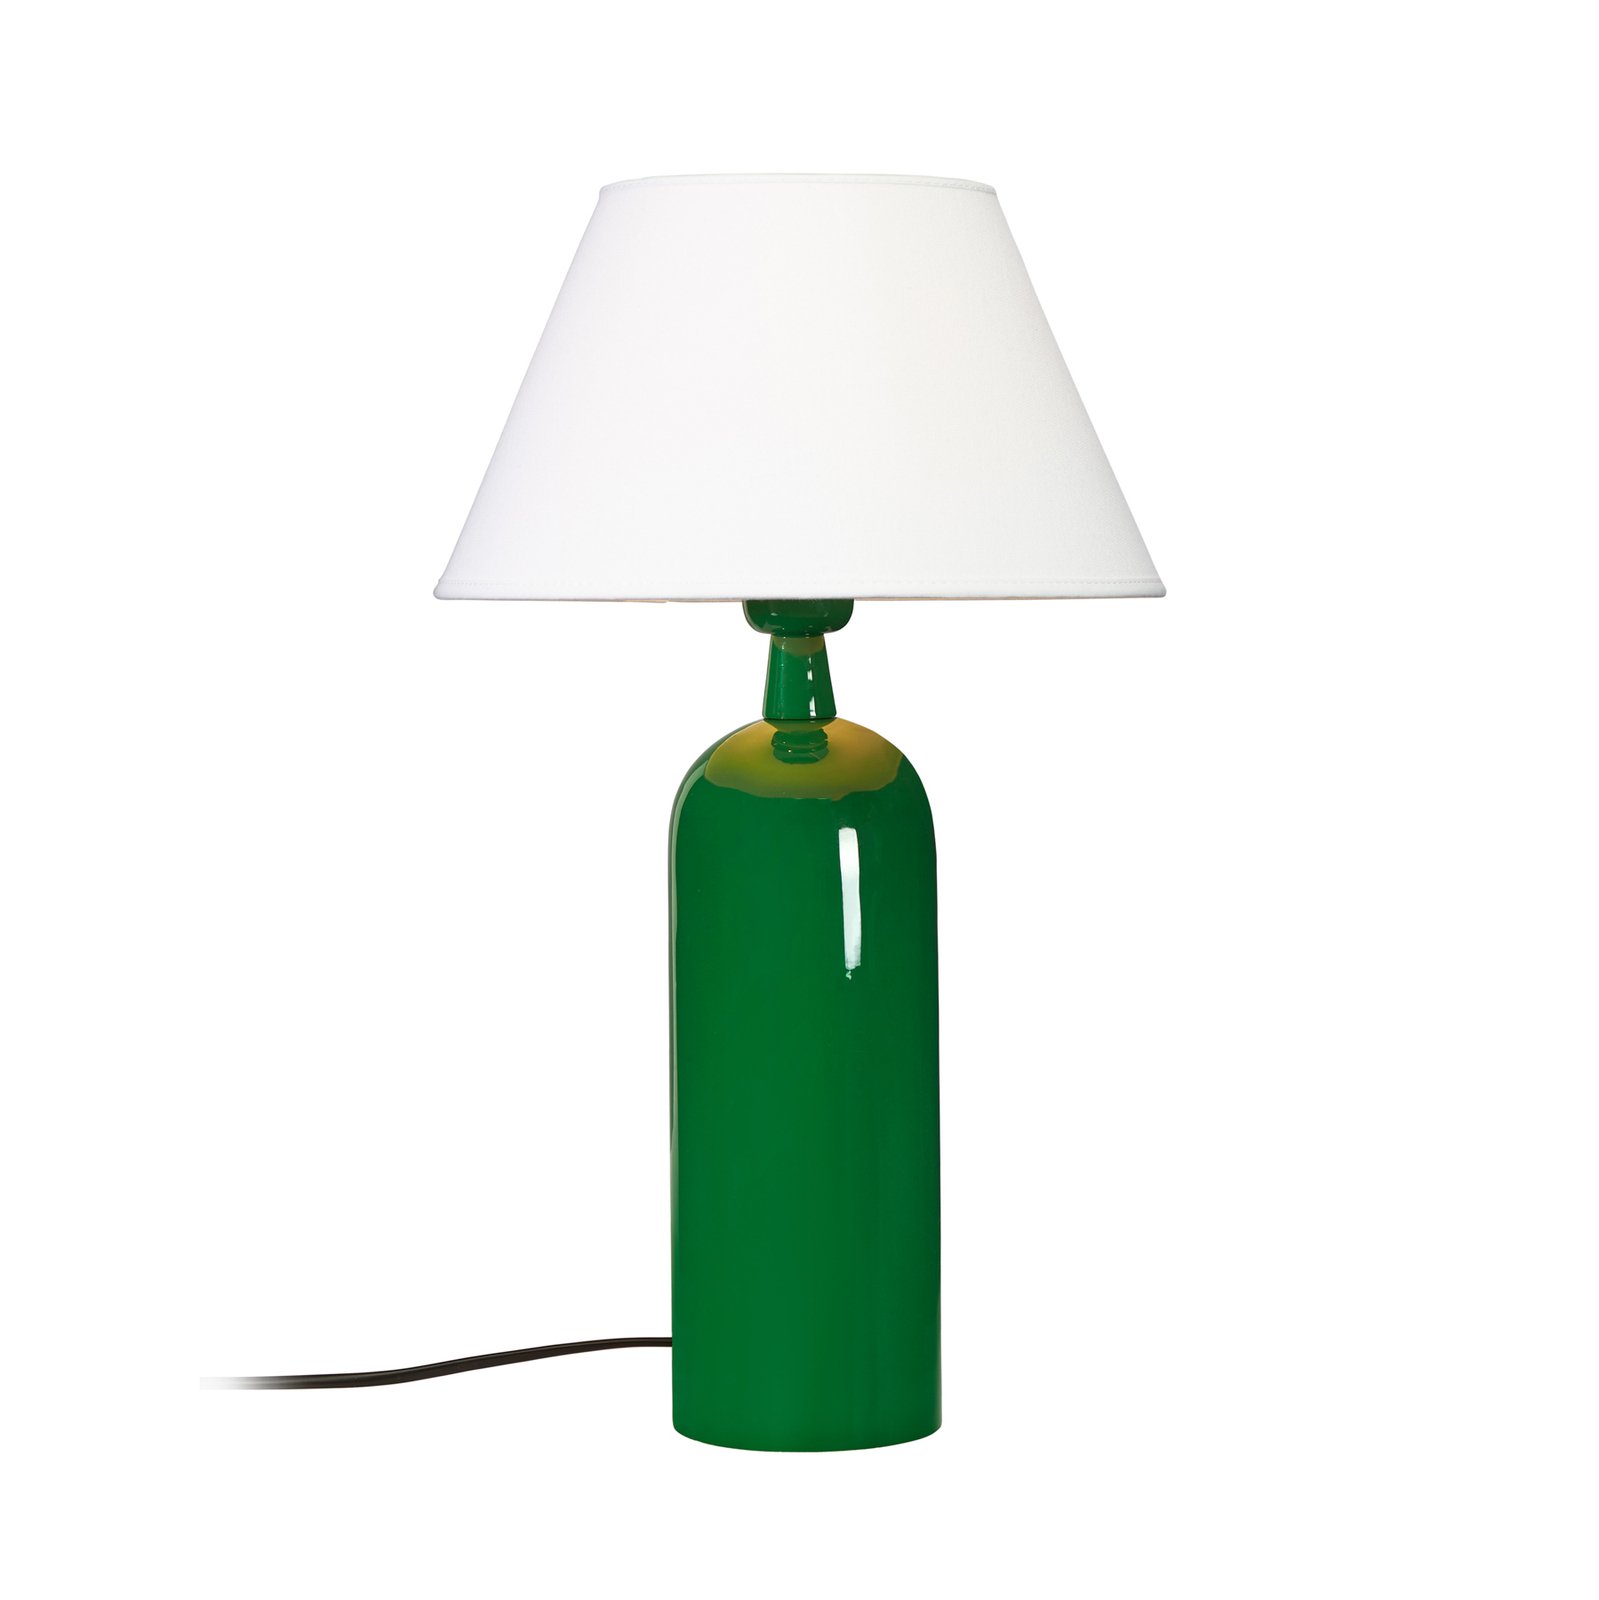 PR Home Carter tafellamp groen/wit